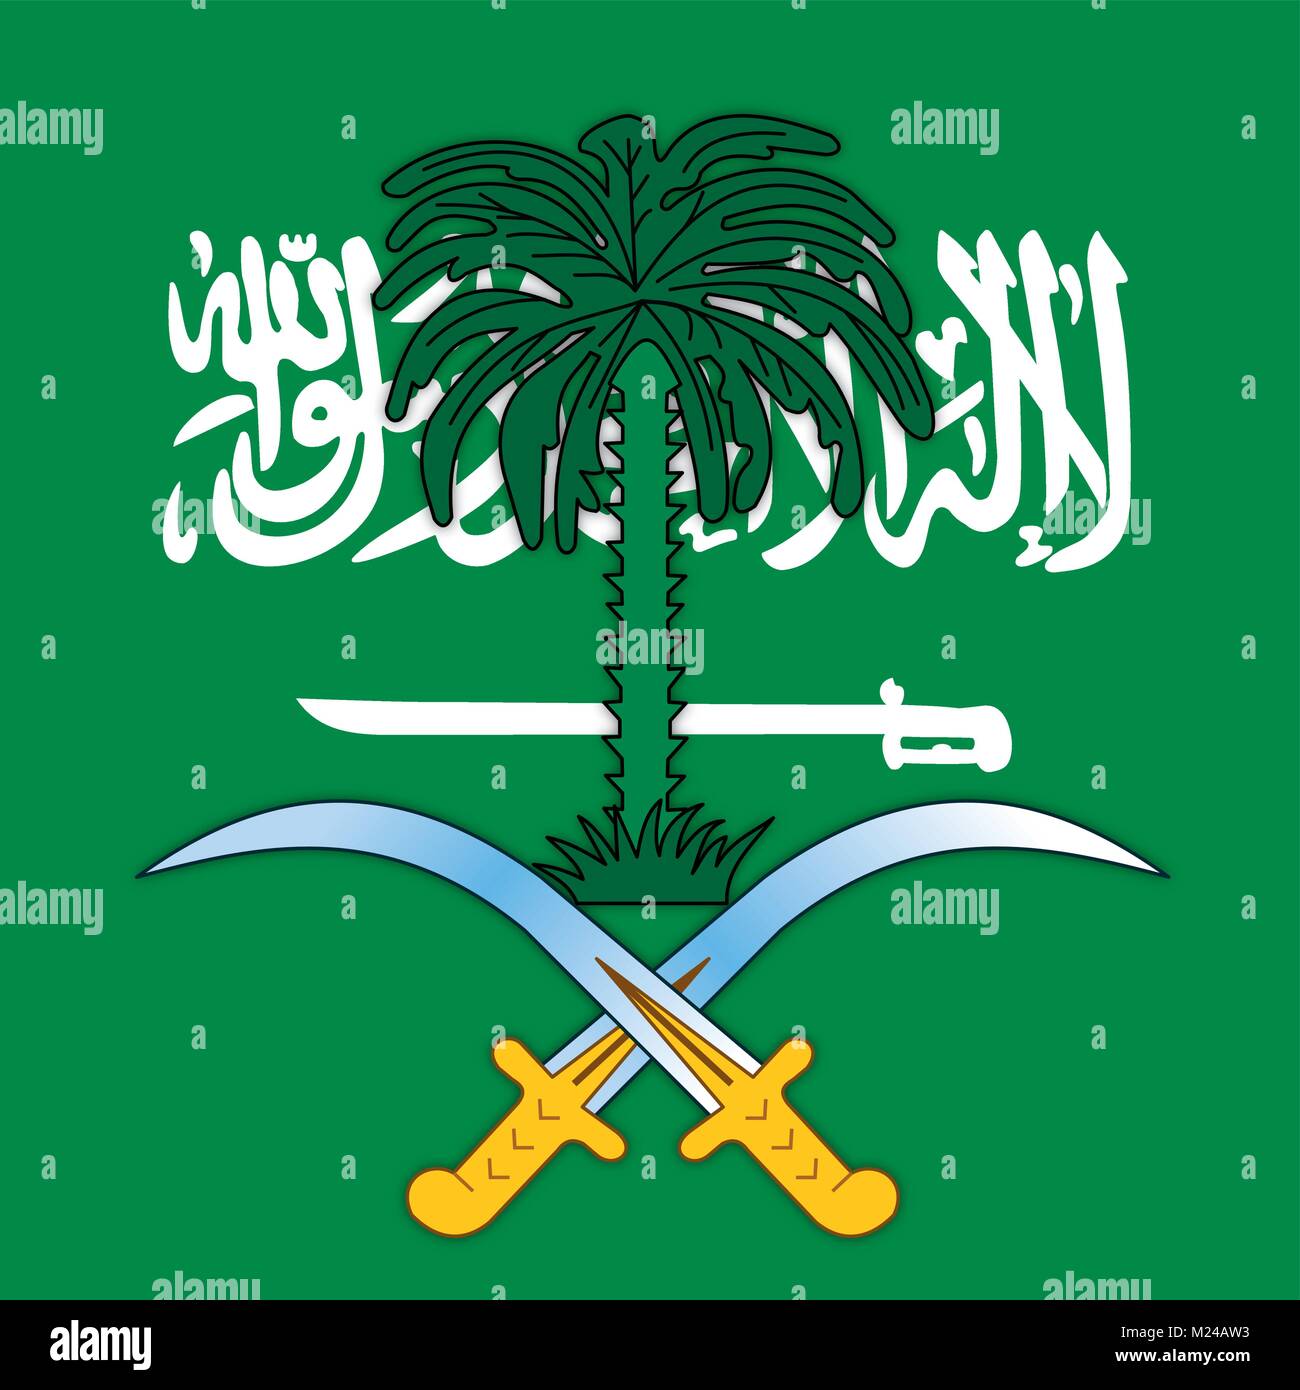 Saudi-arabien Wappen und Flagge, offiziellen Symbole der Nation Stock Vektor